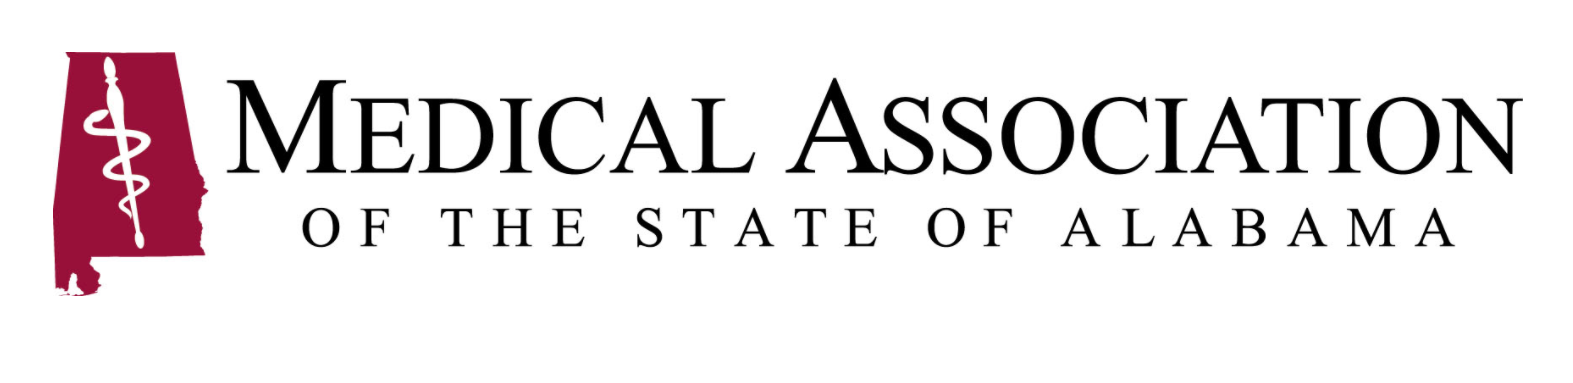 Medical Association of the State of Alabama